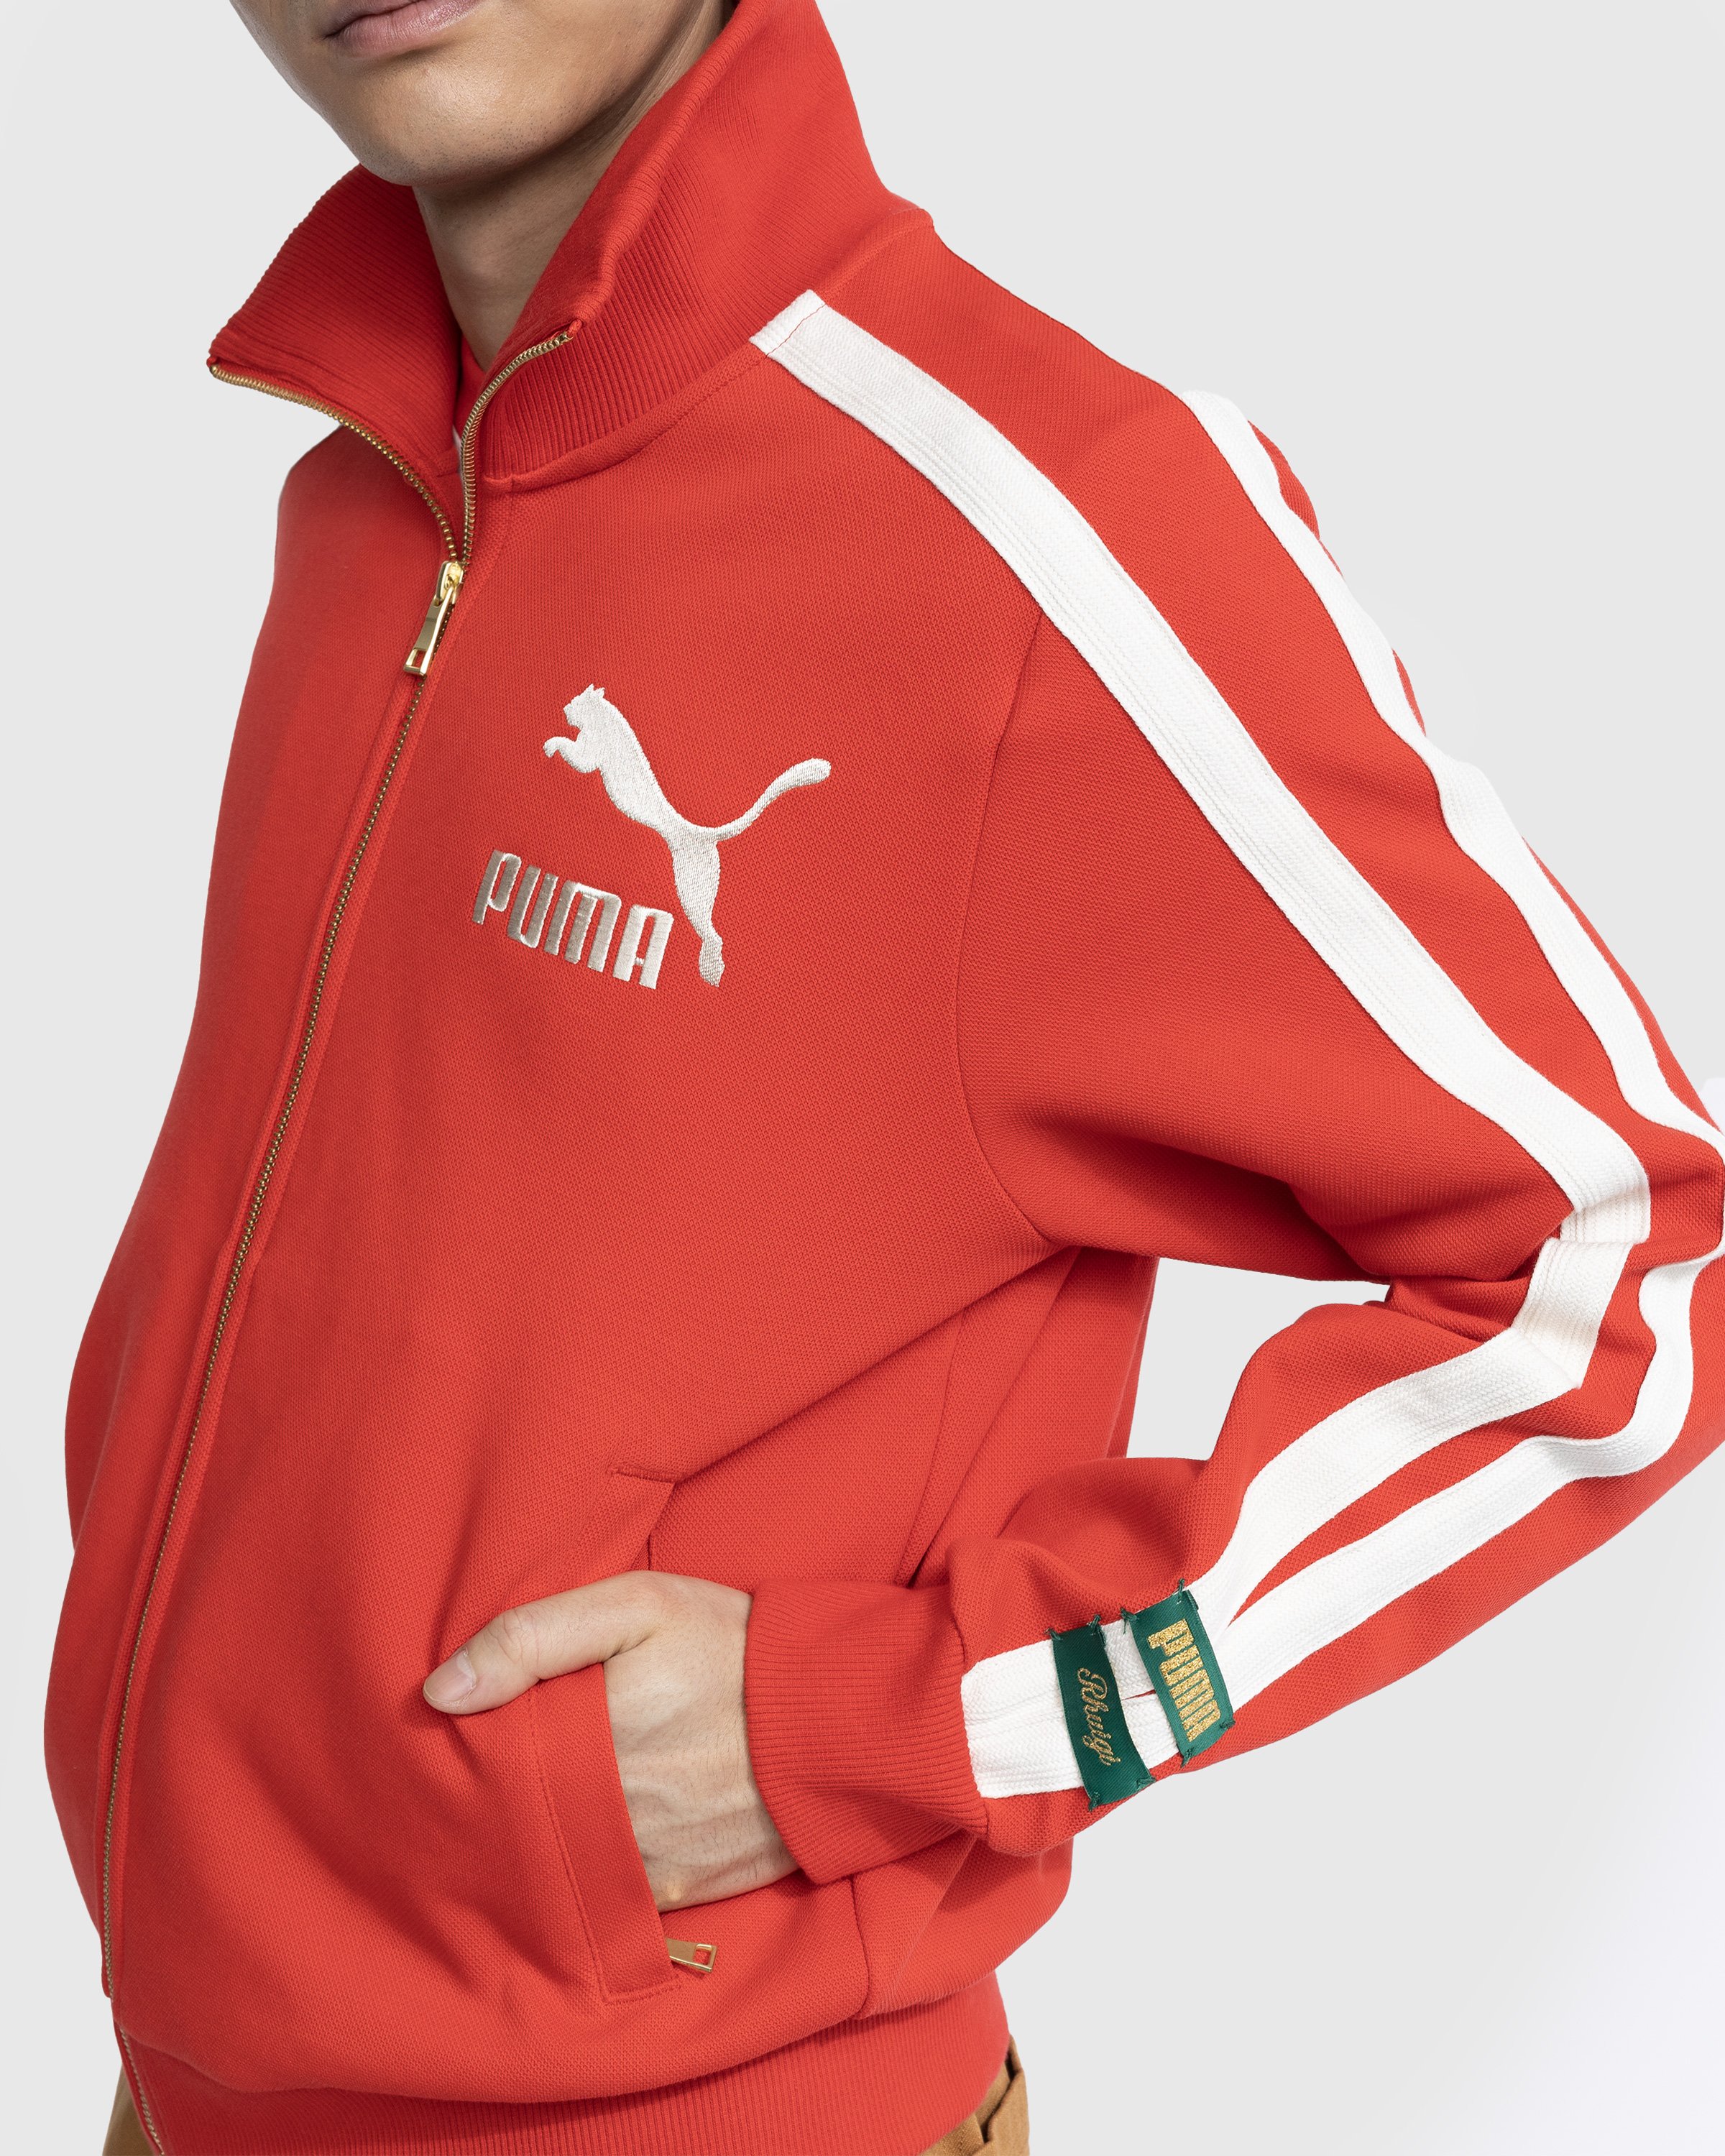 Puma x Rhuigi - T7 Track Top Red - Clothing - Red - Image 5